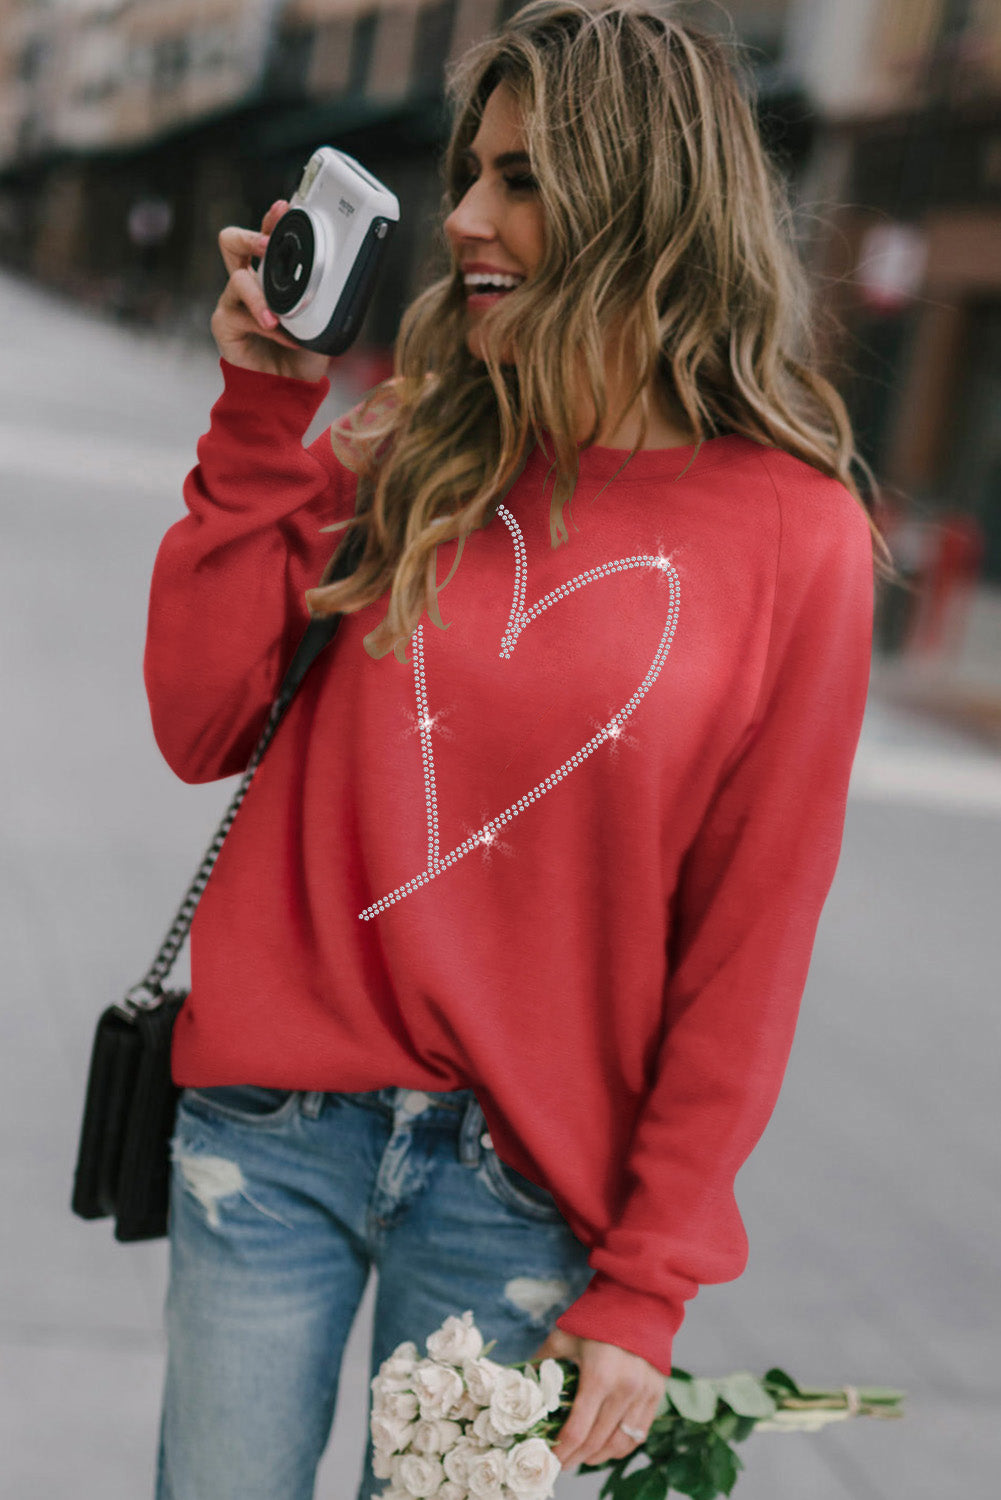 Fiery Red Rhinestone Heart Shaped Long Sleeve Sweatshirt Graphic Sweatshirts JT's Designer Fashion